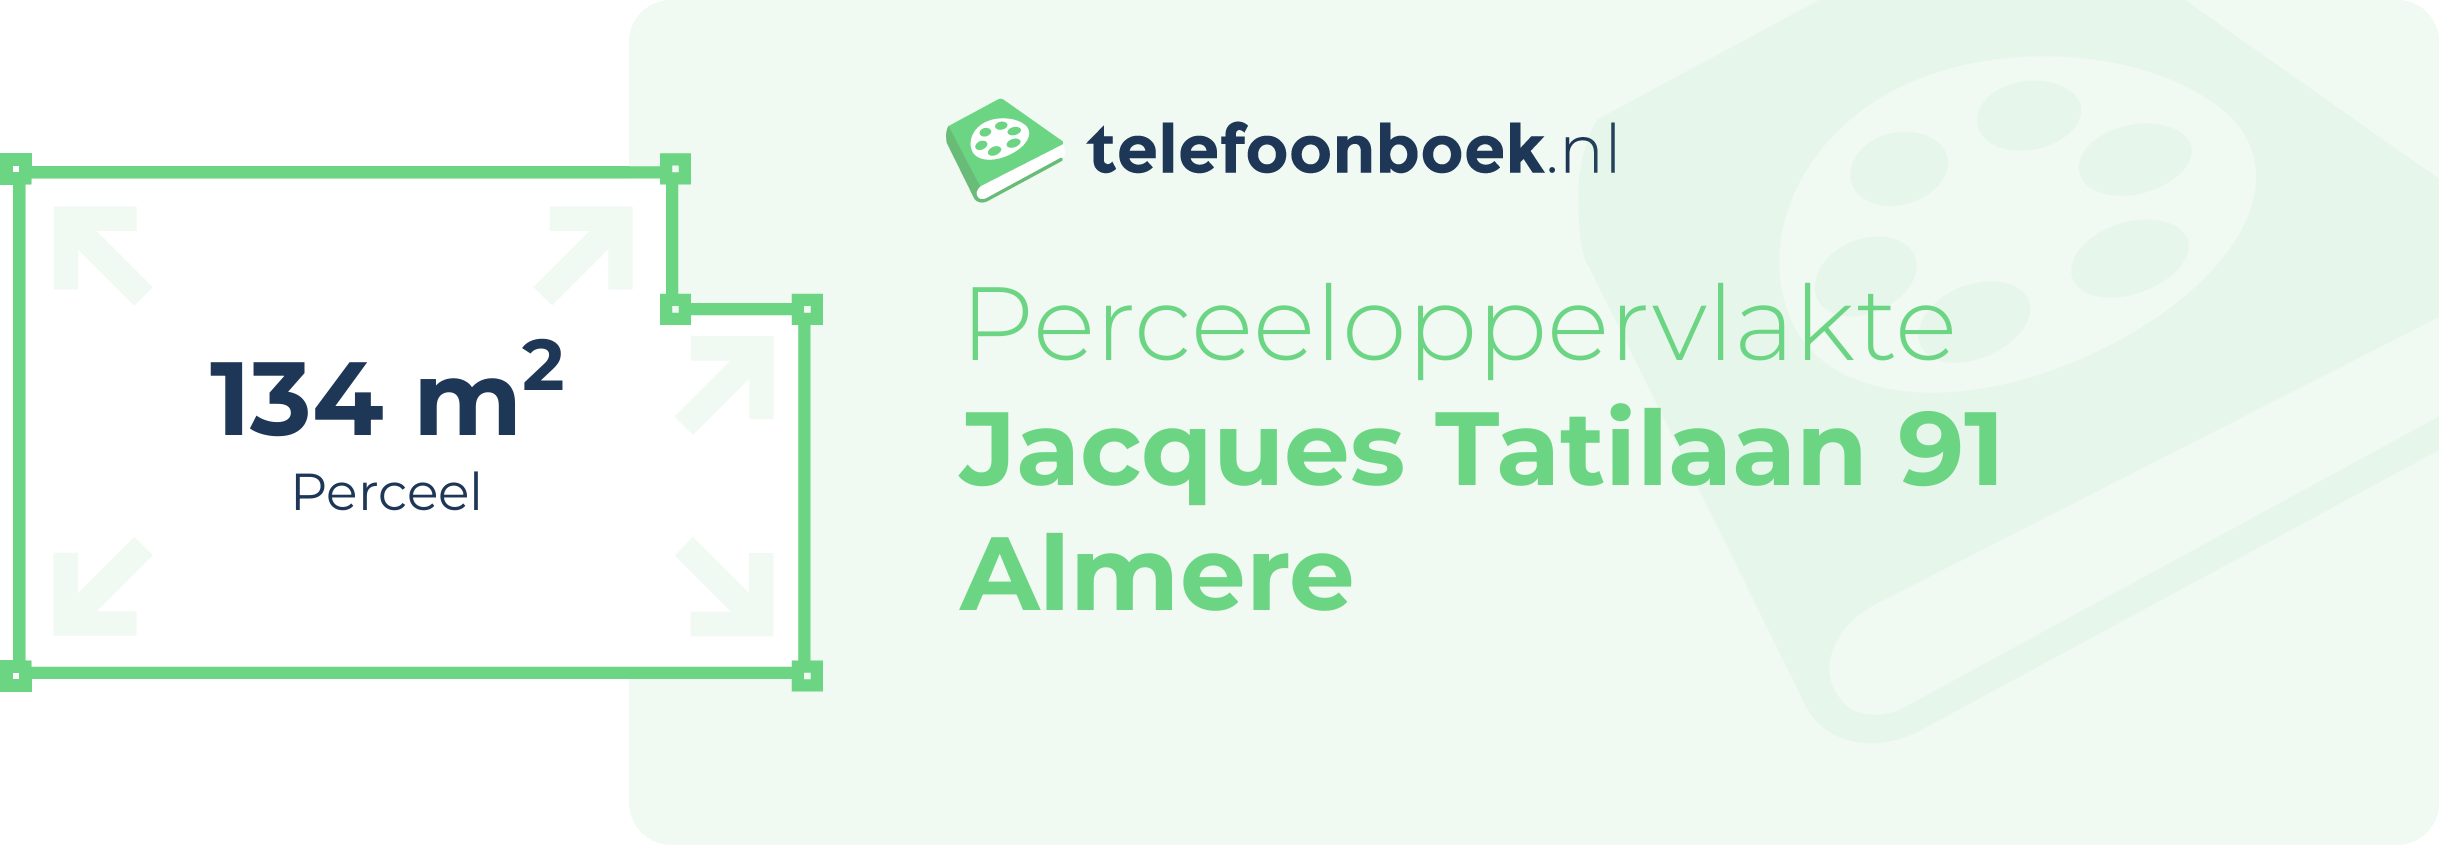 Perceeloppervlakte Jacques Tatilaan 91 Almere